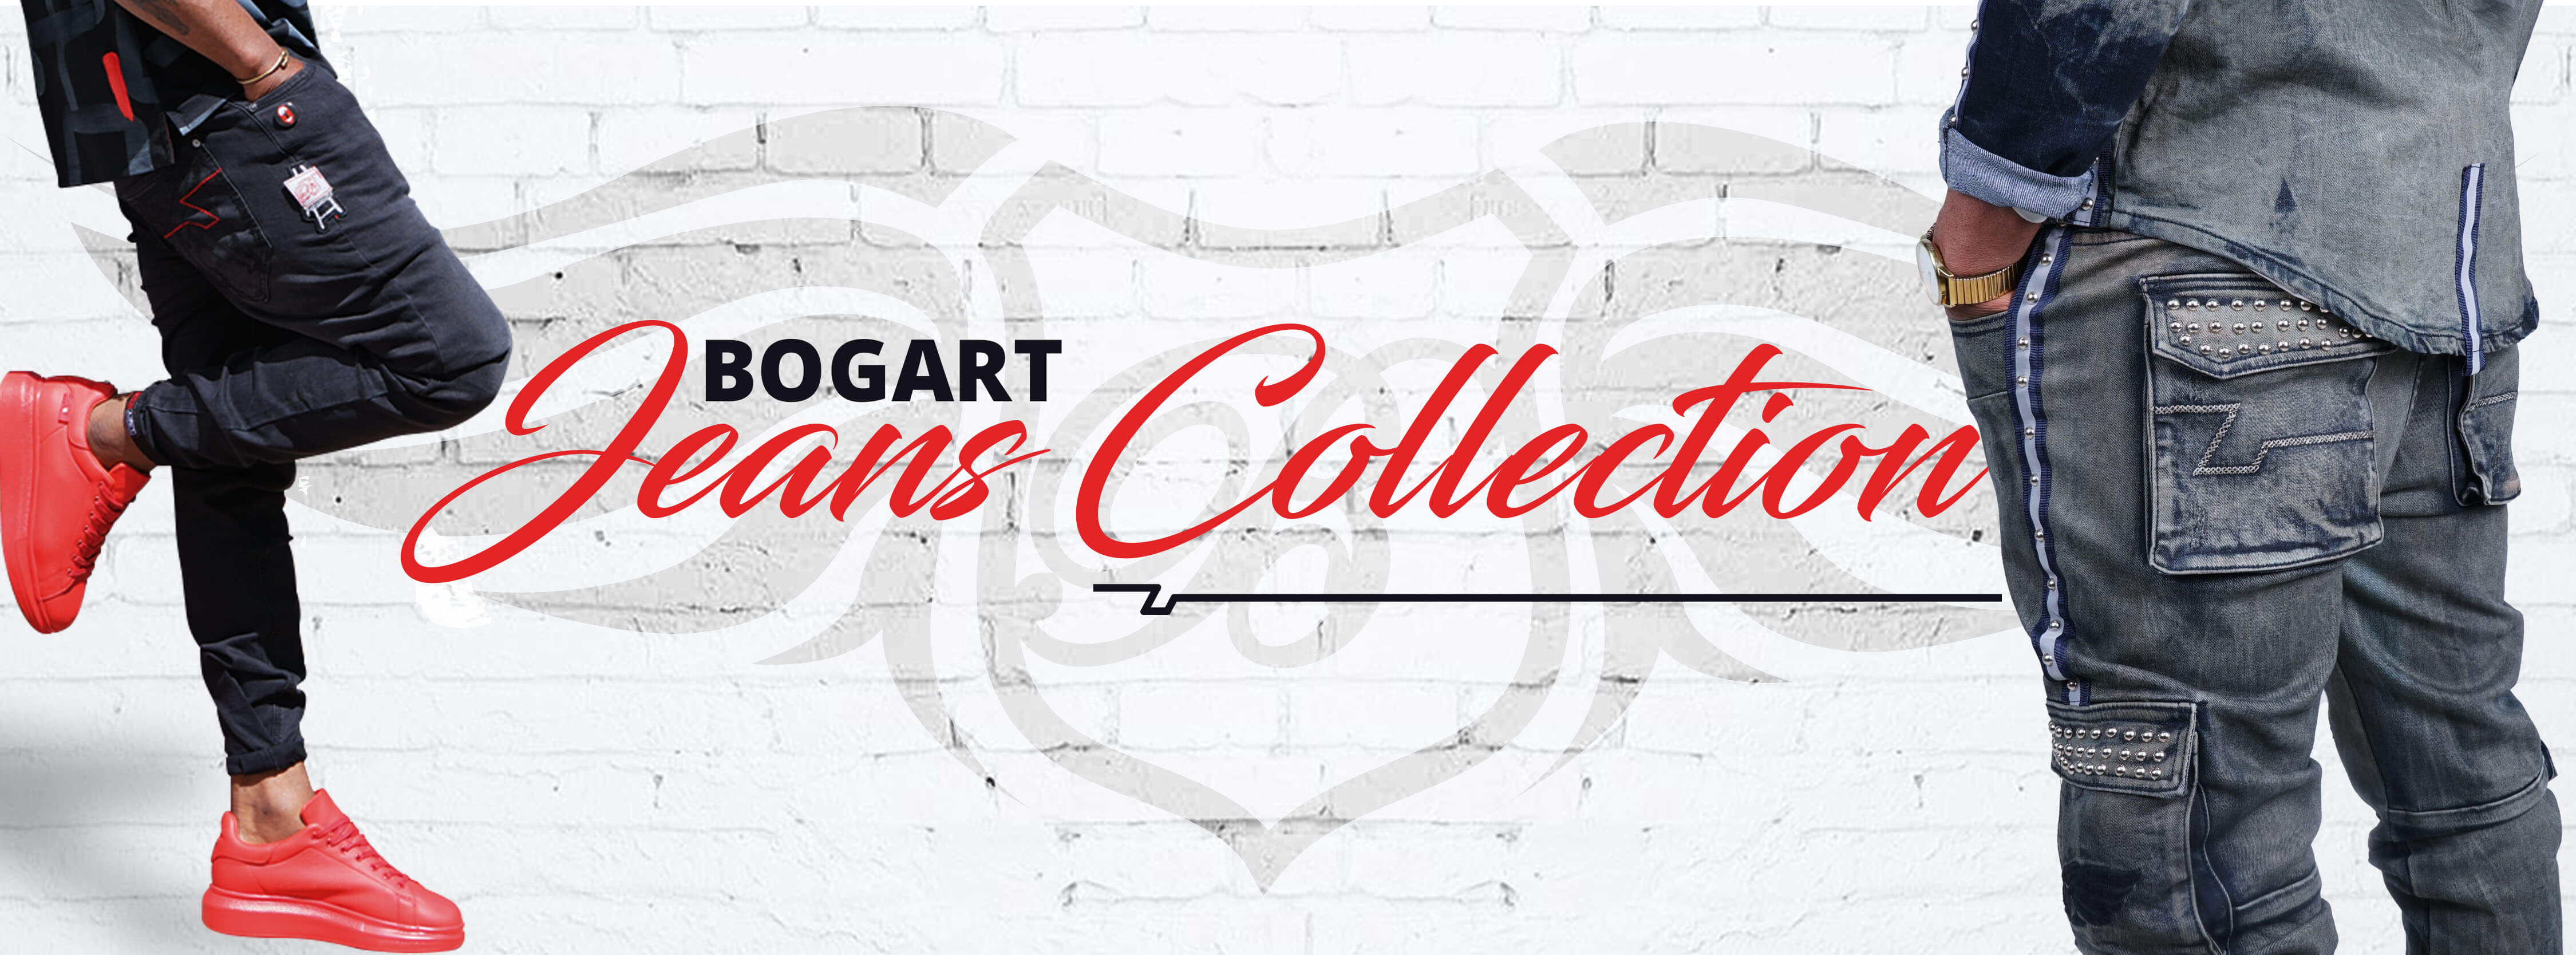 Bogart Jeans Collection Banner Image